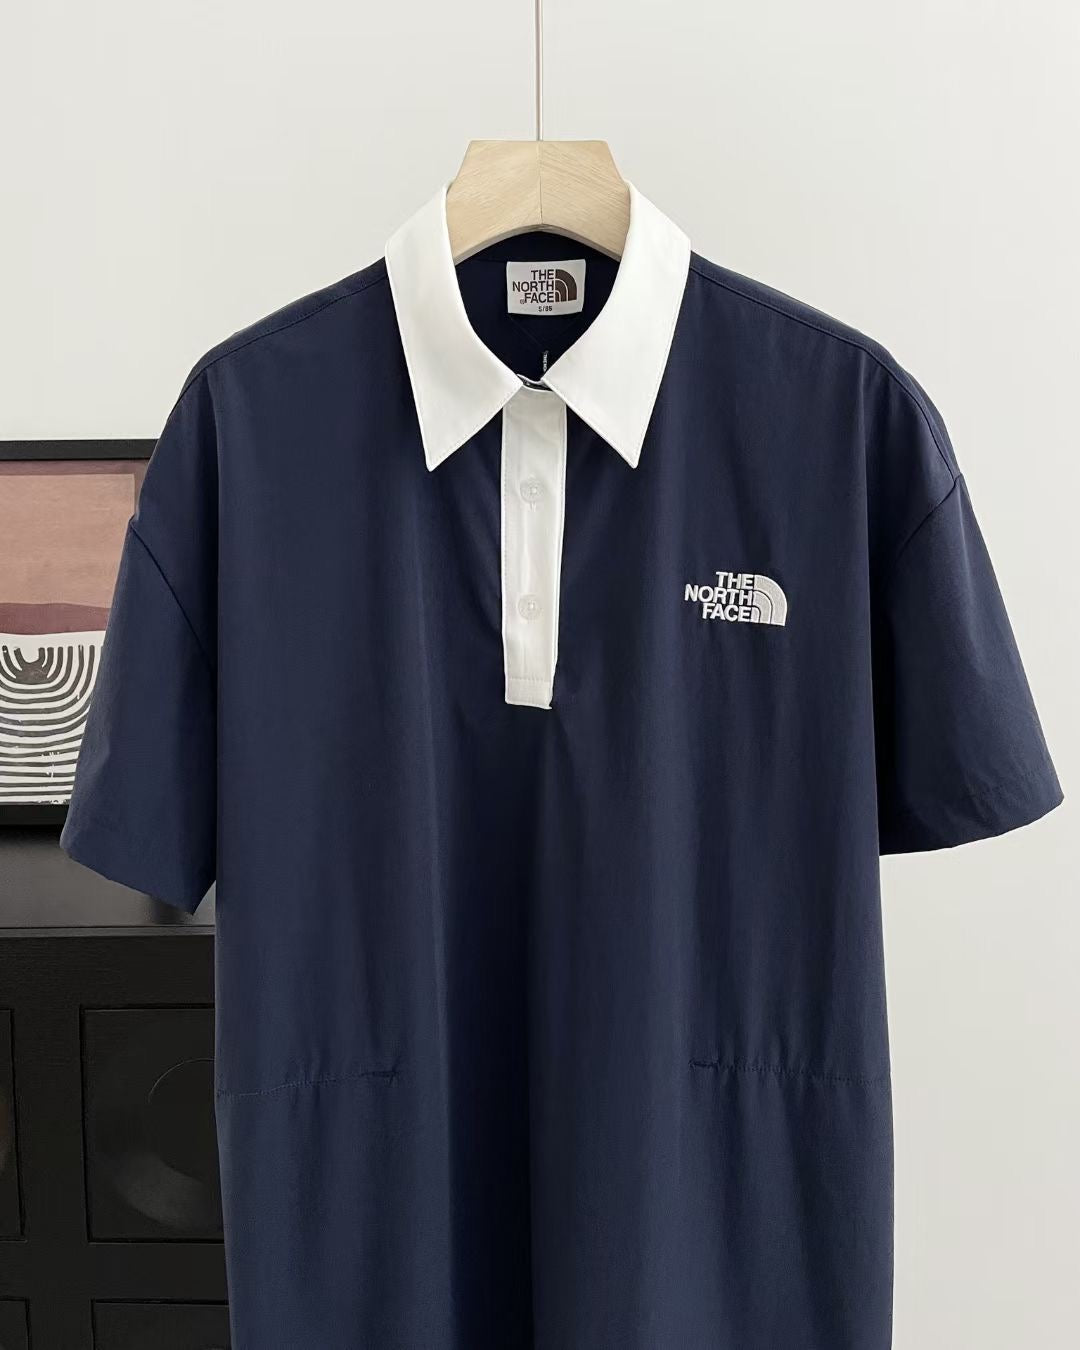 韓國TNF polo shirt one piece